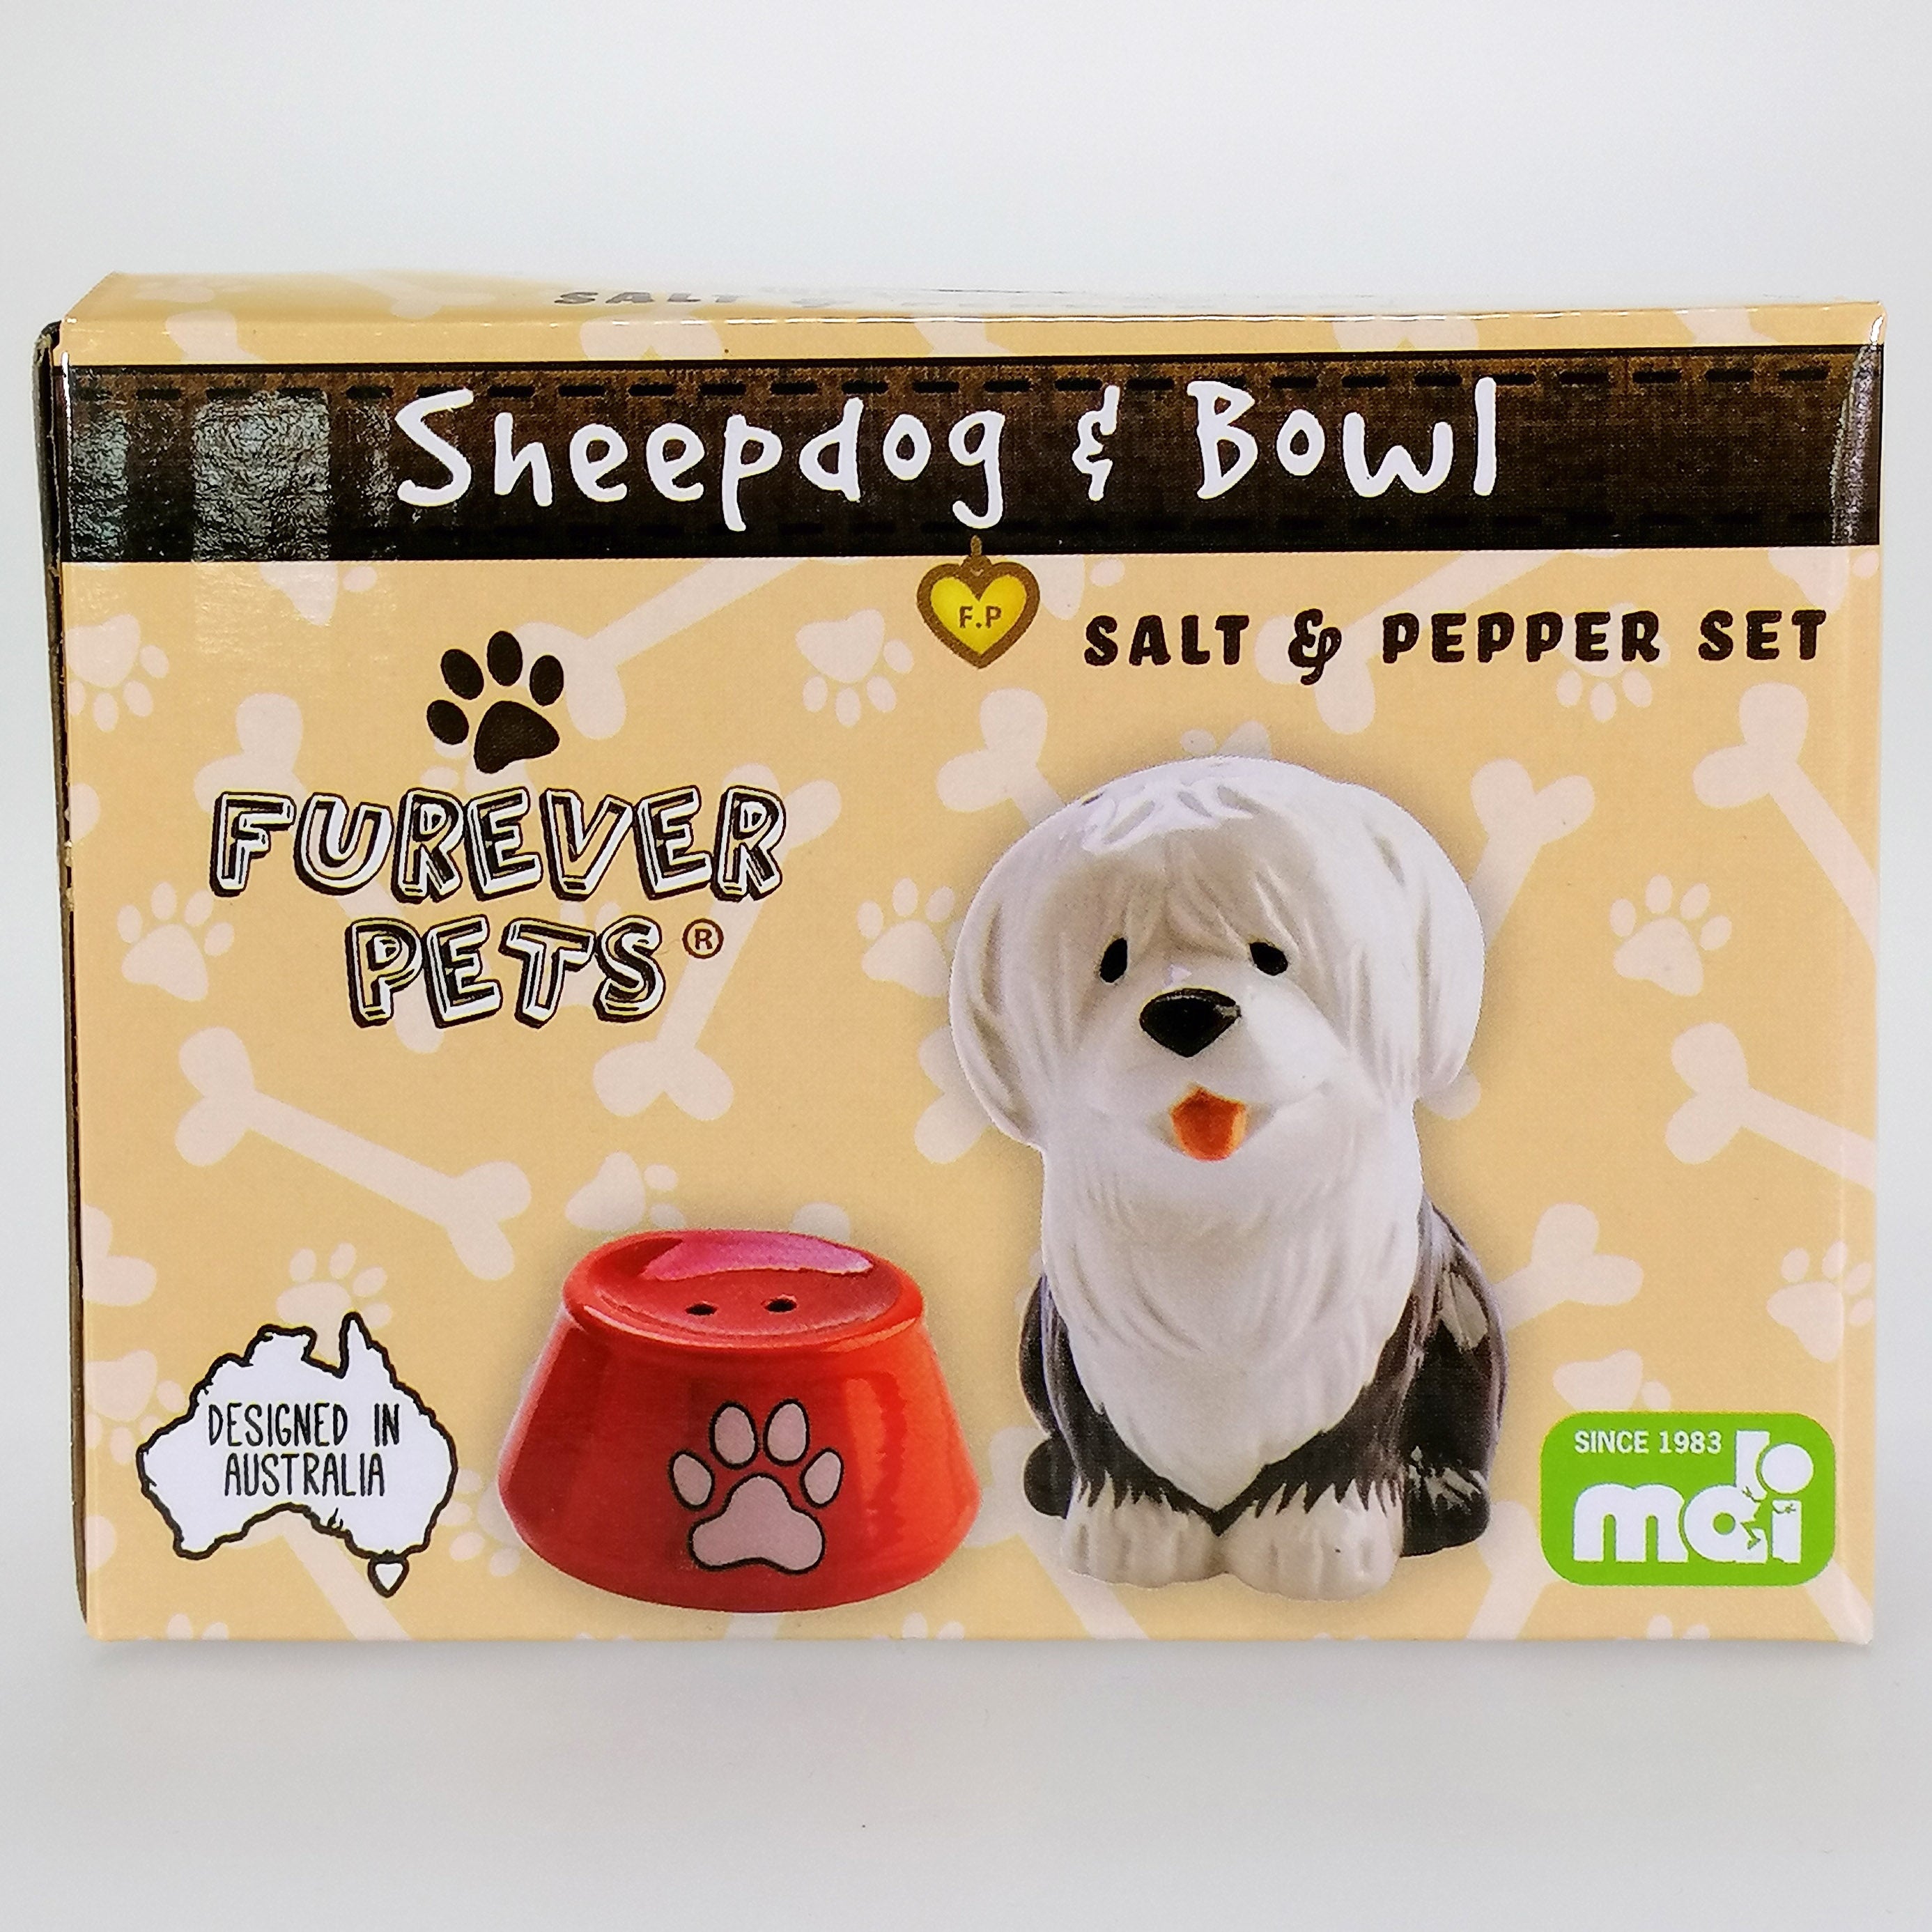 Sheep Dog & Bowl' Collectible Ceramic Salt & Pepper Set